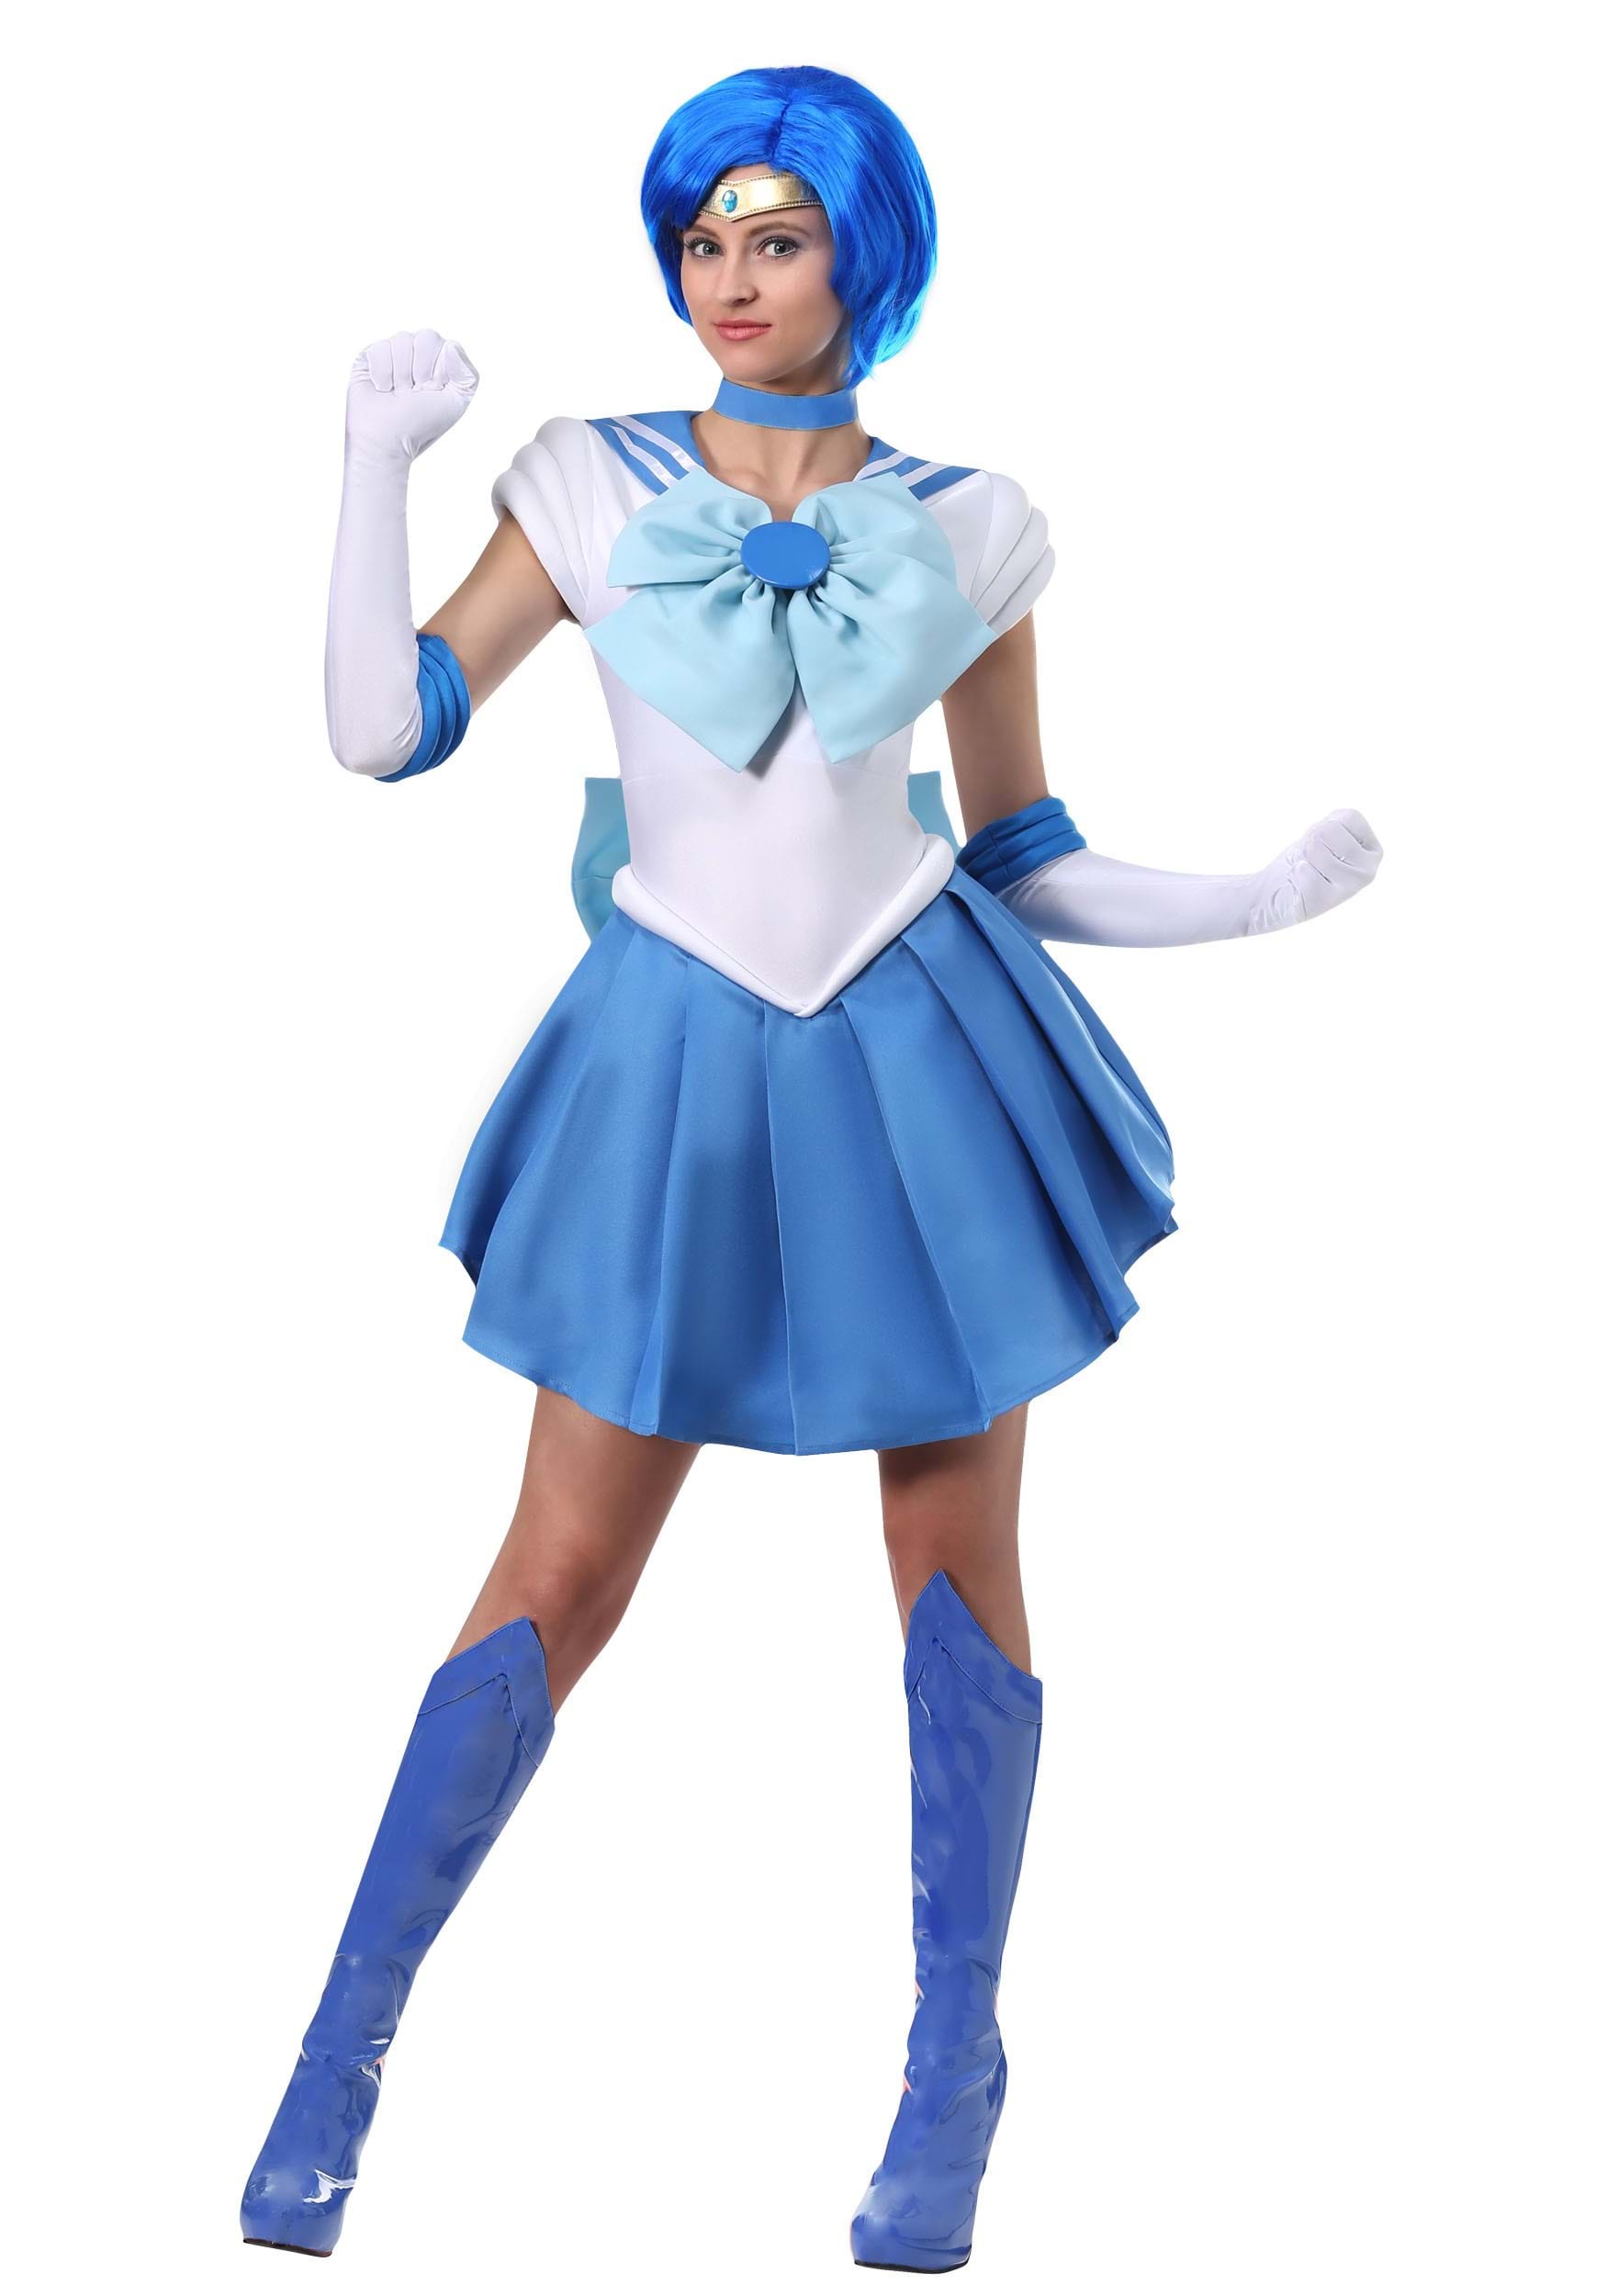 Sailor Mercury Costume For Women , Cosplay Costume For Women's